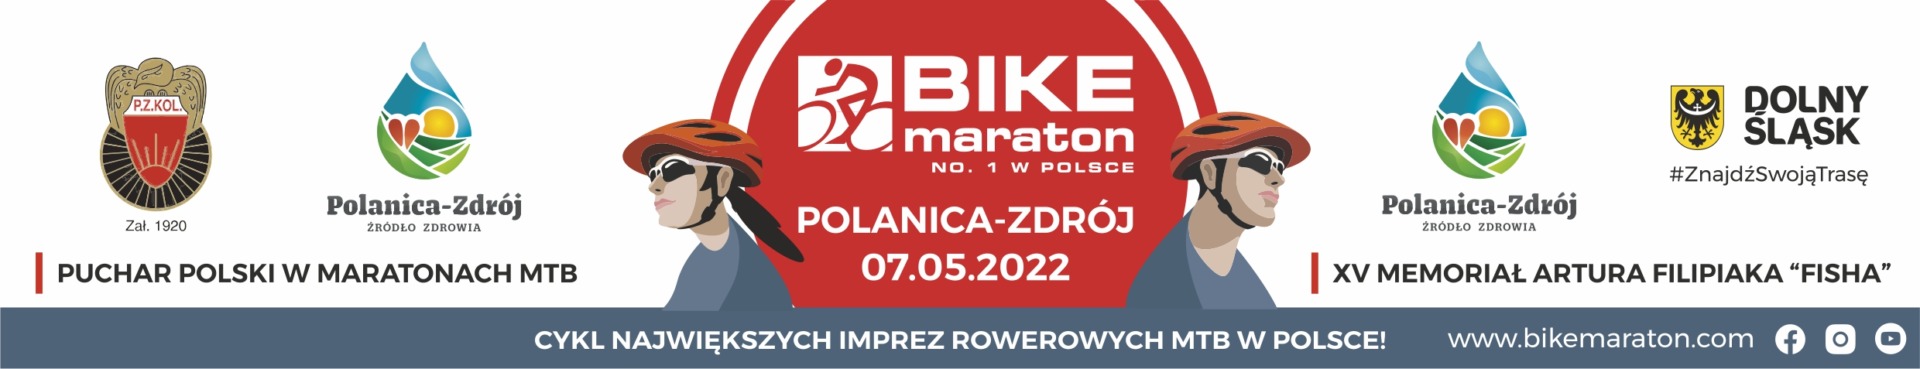 bike-maraton-2022-polanica-zdroj-baner